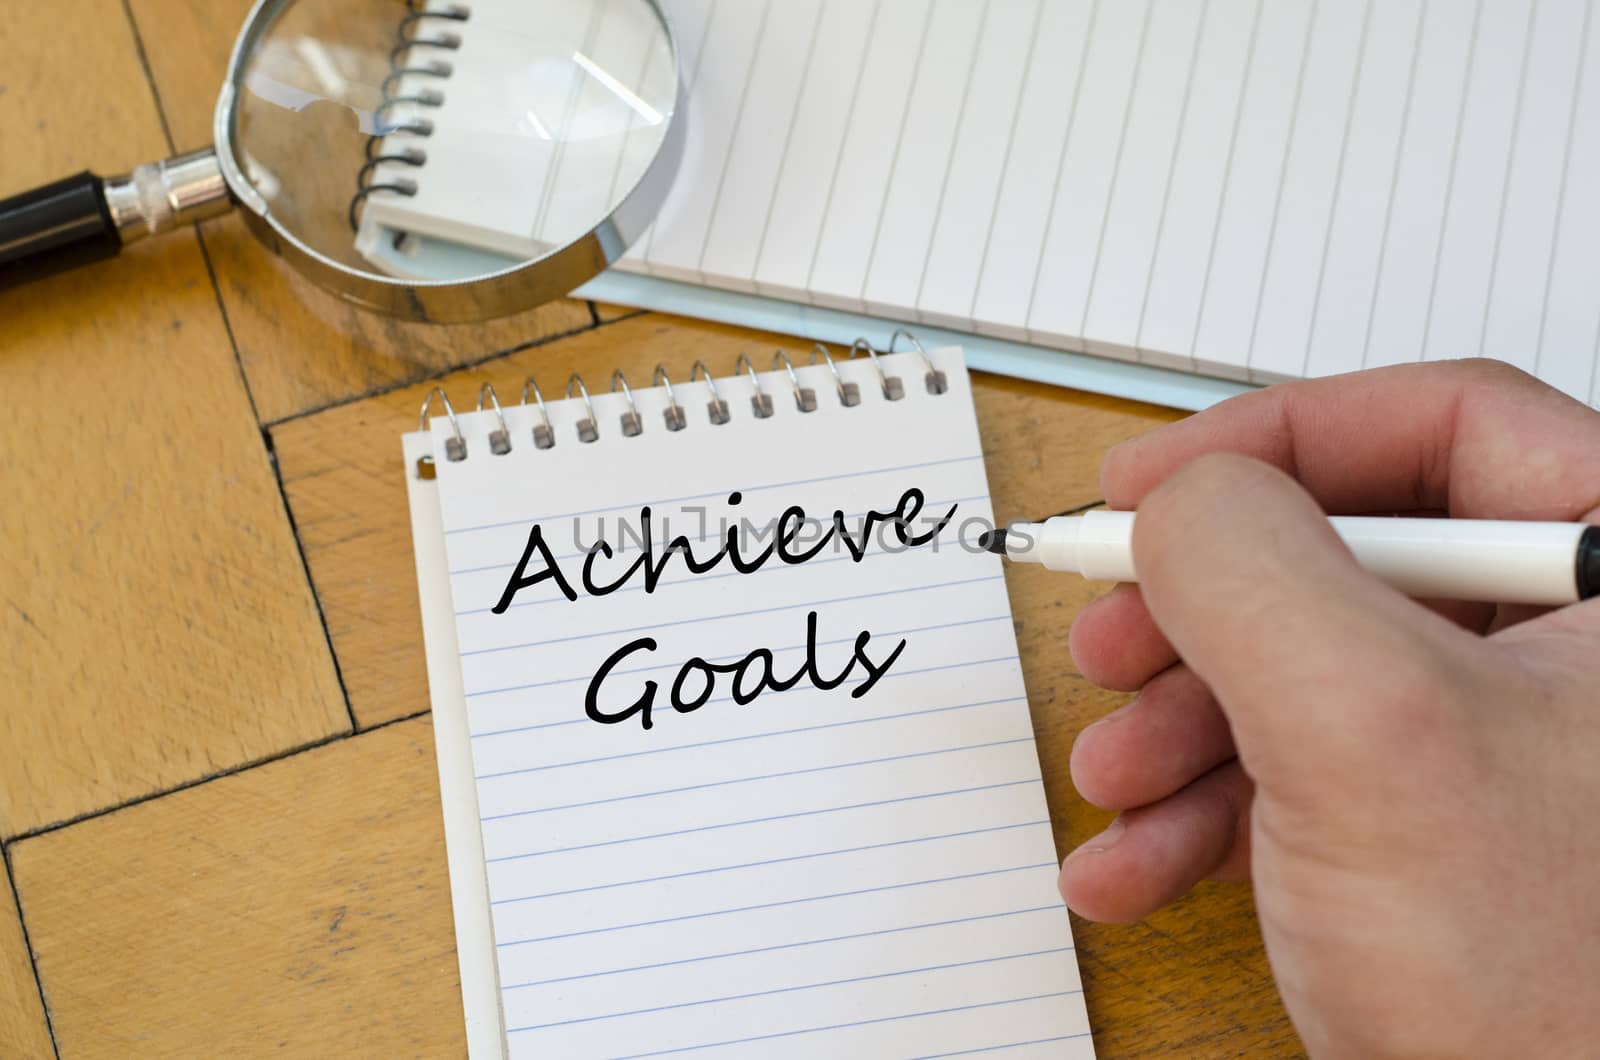 Achieve goals text concept write on notebook